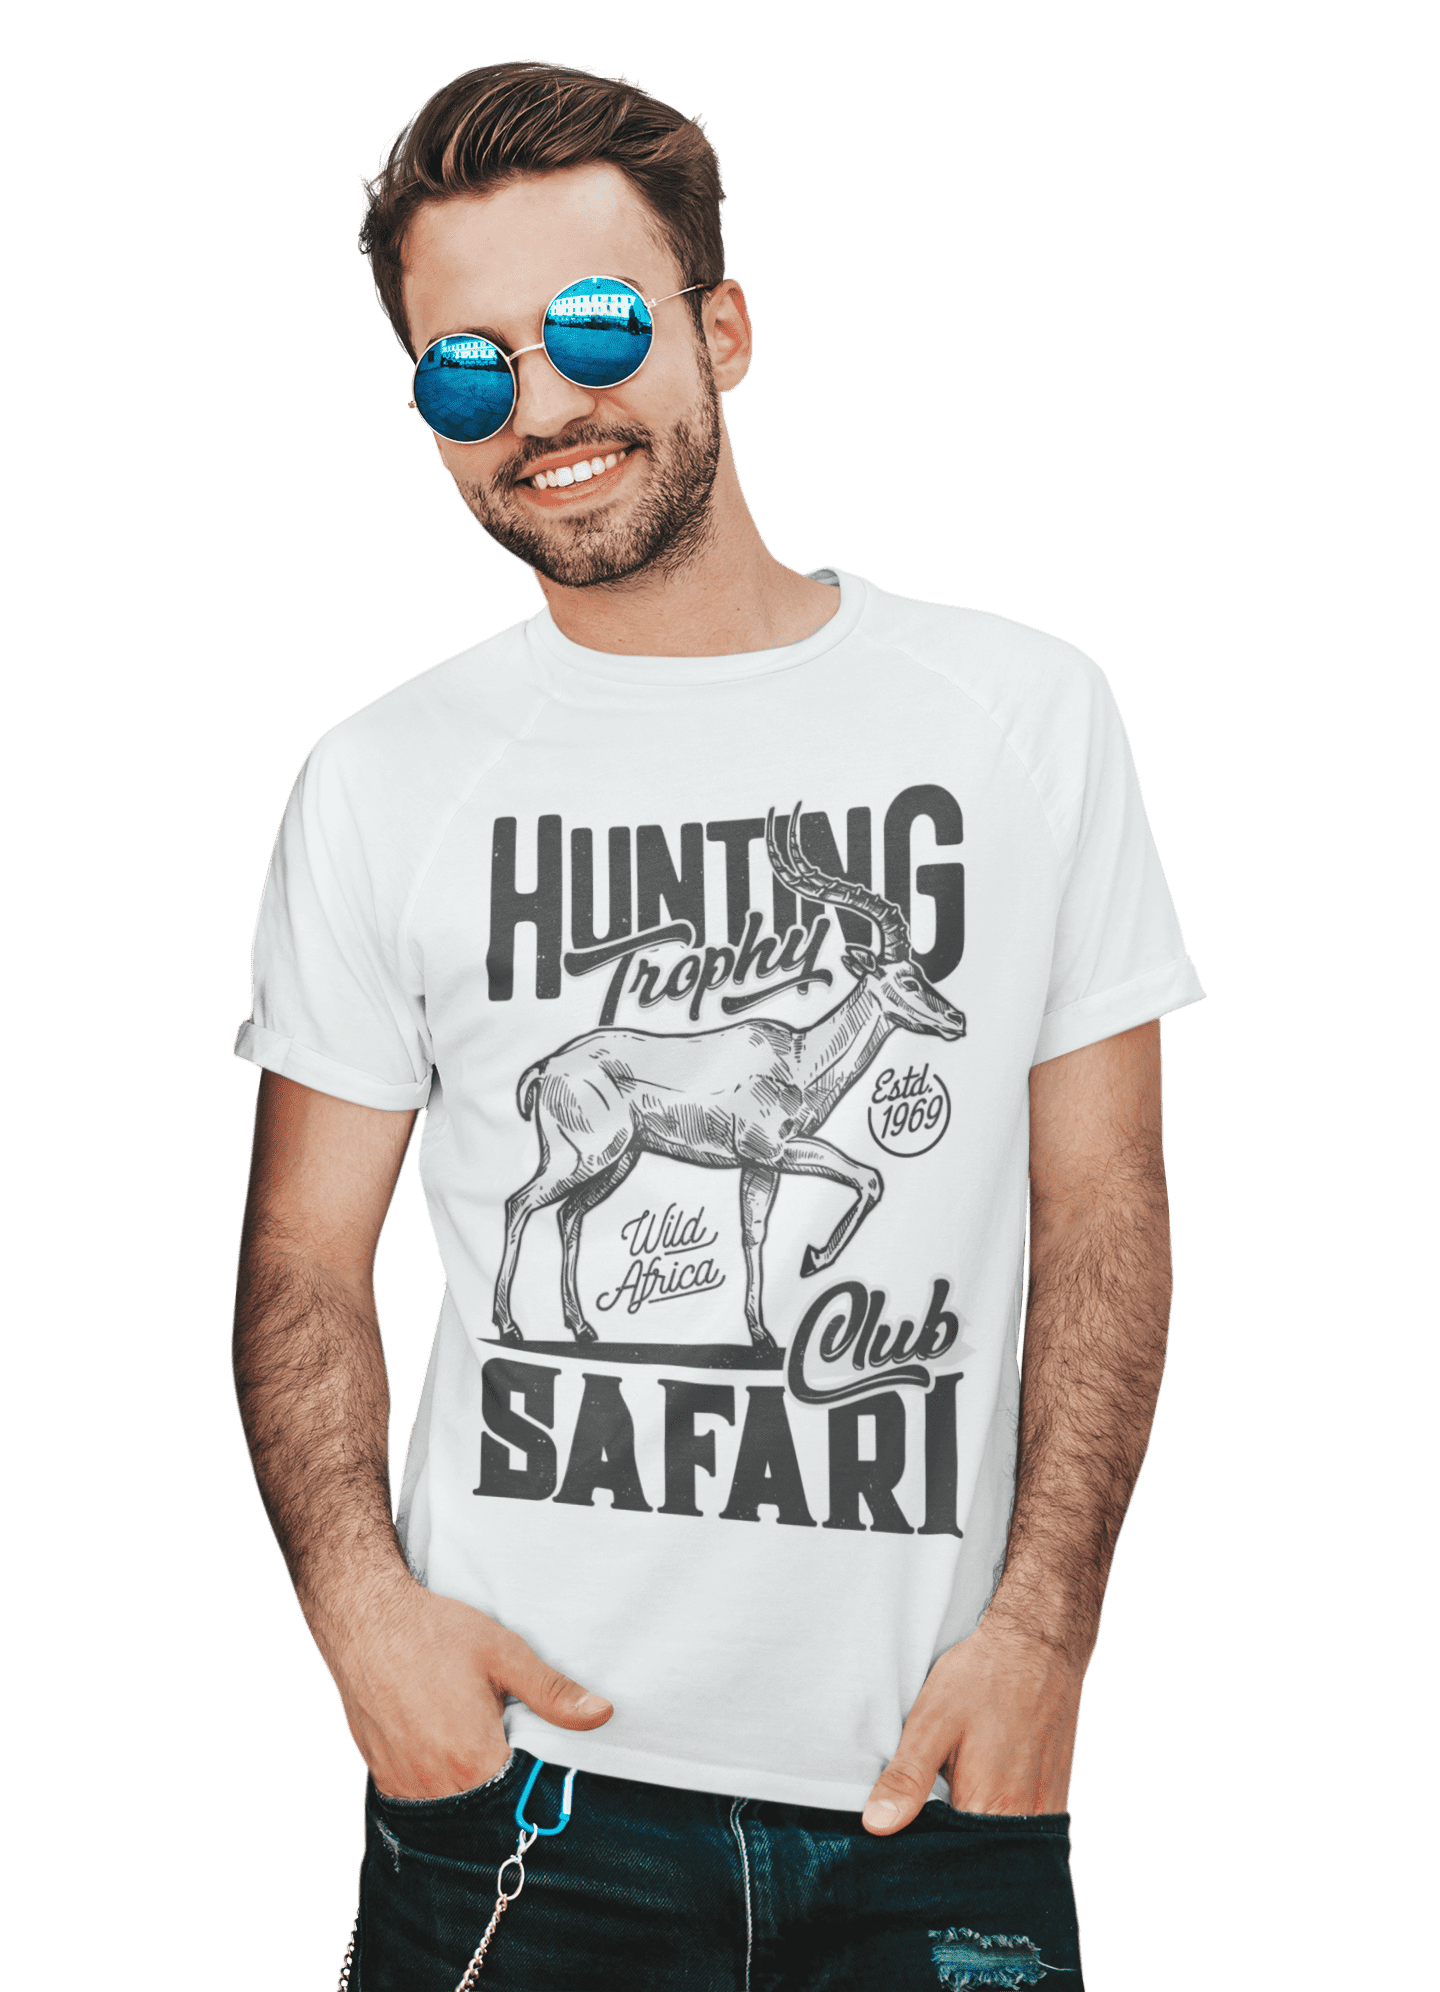 kaos hunting safari